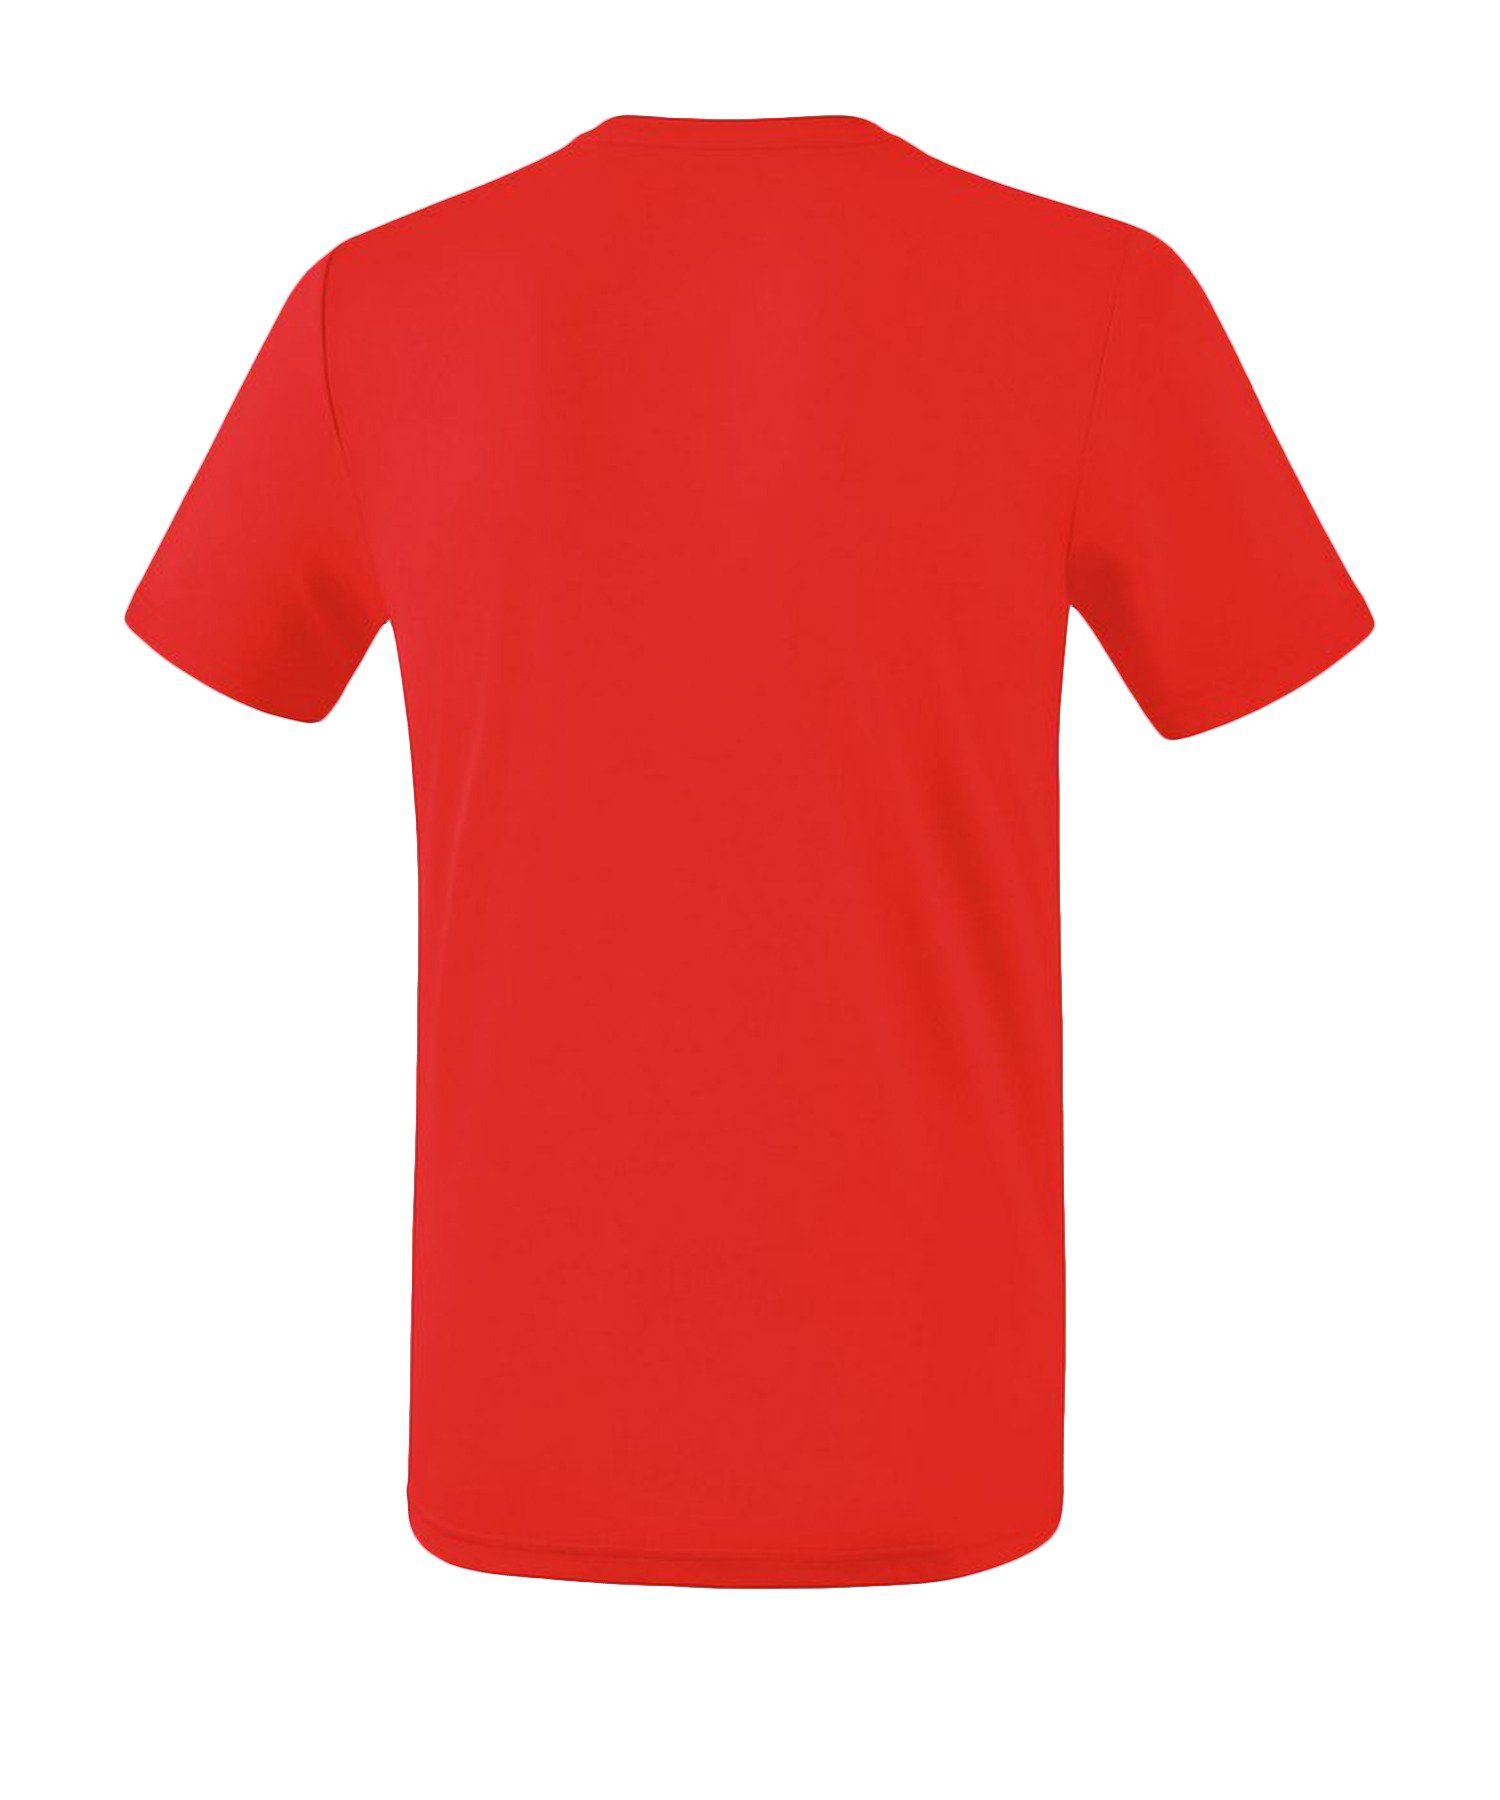 T-Shirt T-Shirt default RotWeiss Promo Funktions Erima